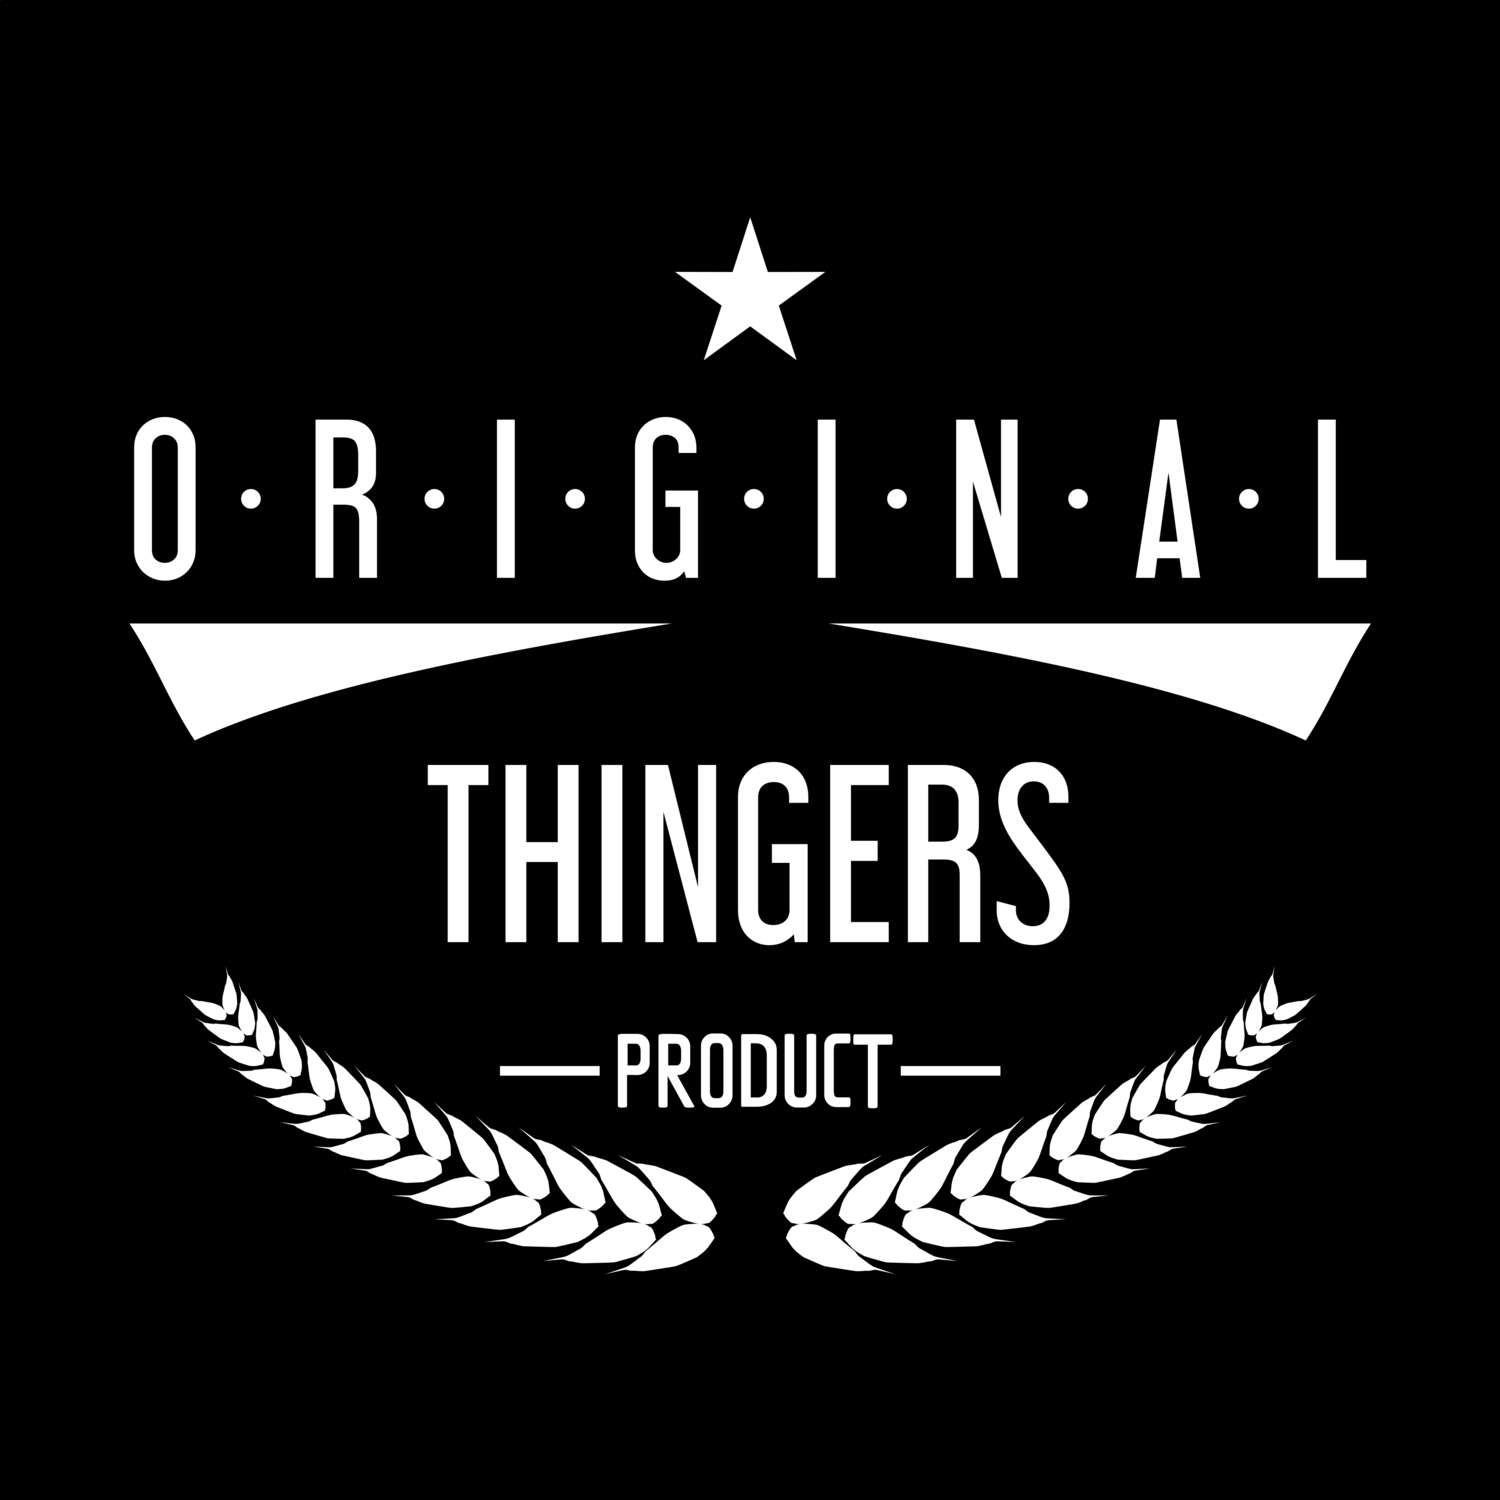 Thingers T-Shirt »Original Product«